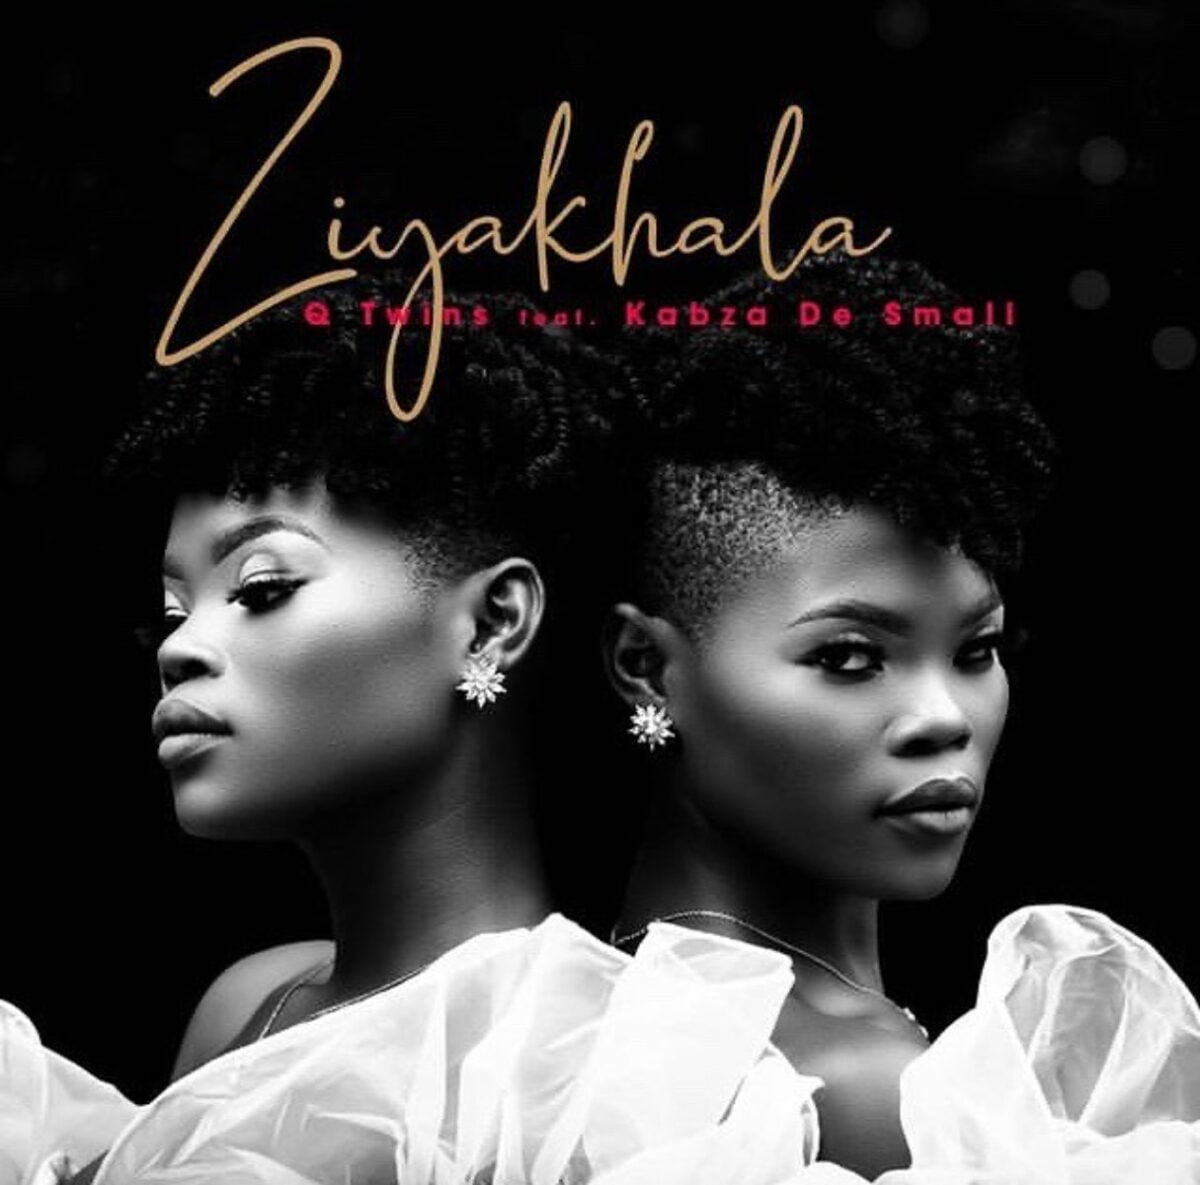 Q Twins Ziyakhala ft. Kabza De Small (MP3 Download)